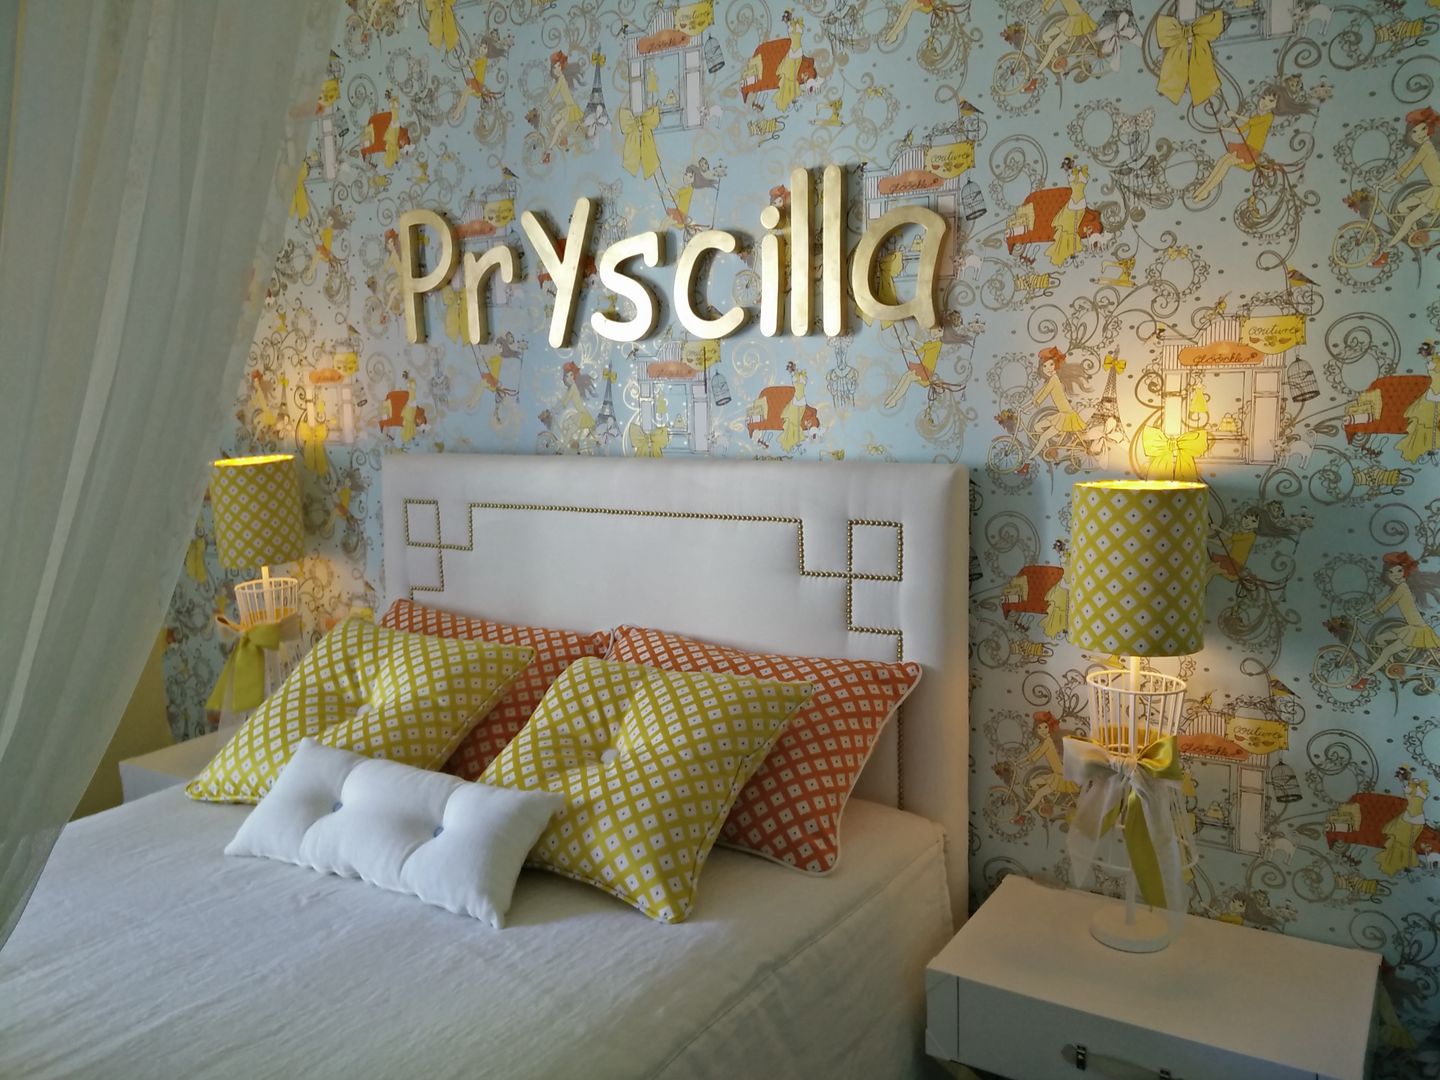 Apartamento no centro de Lisboa , Angelourenzzo - Interior Design Angelourenzzo - Interior Design Tropical style bedroom